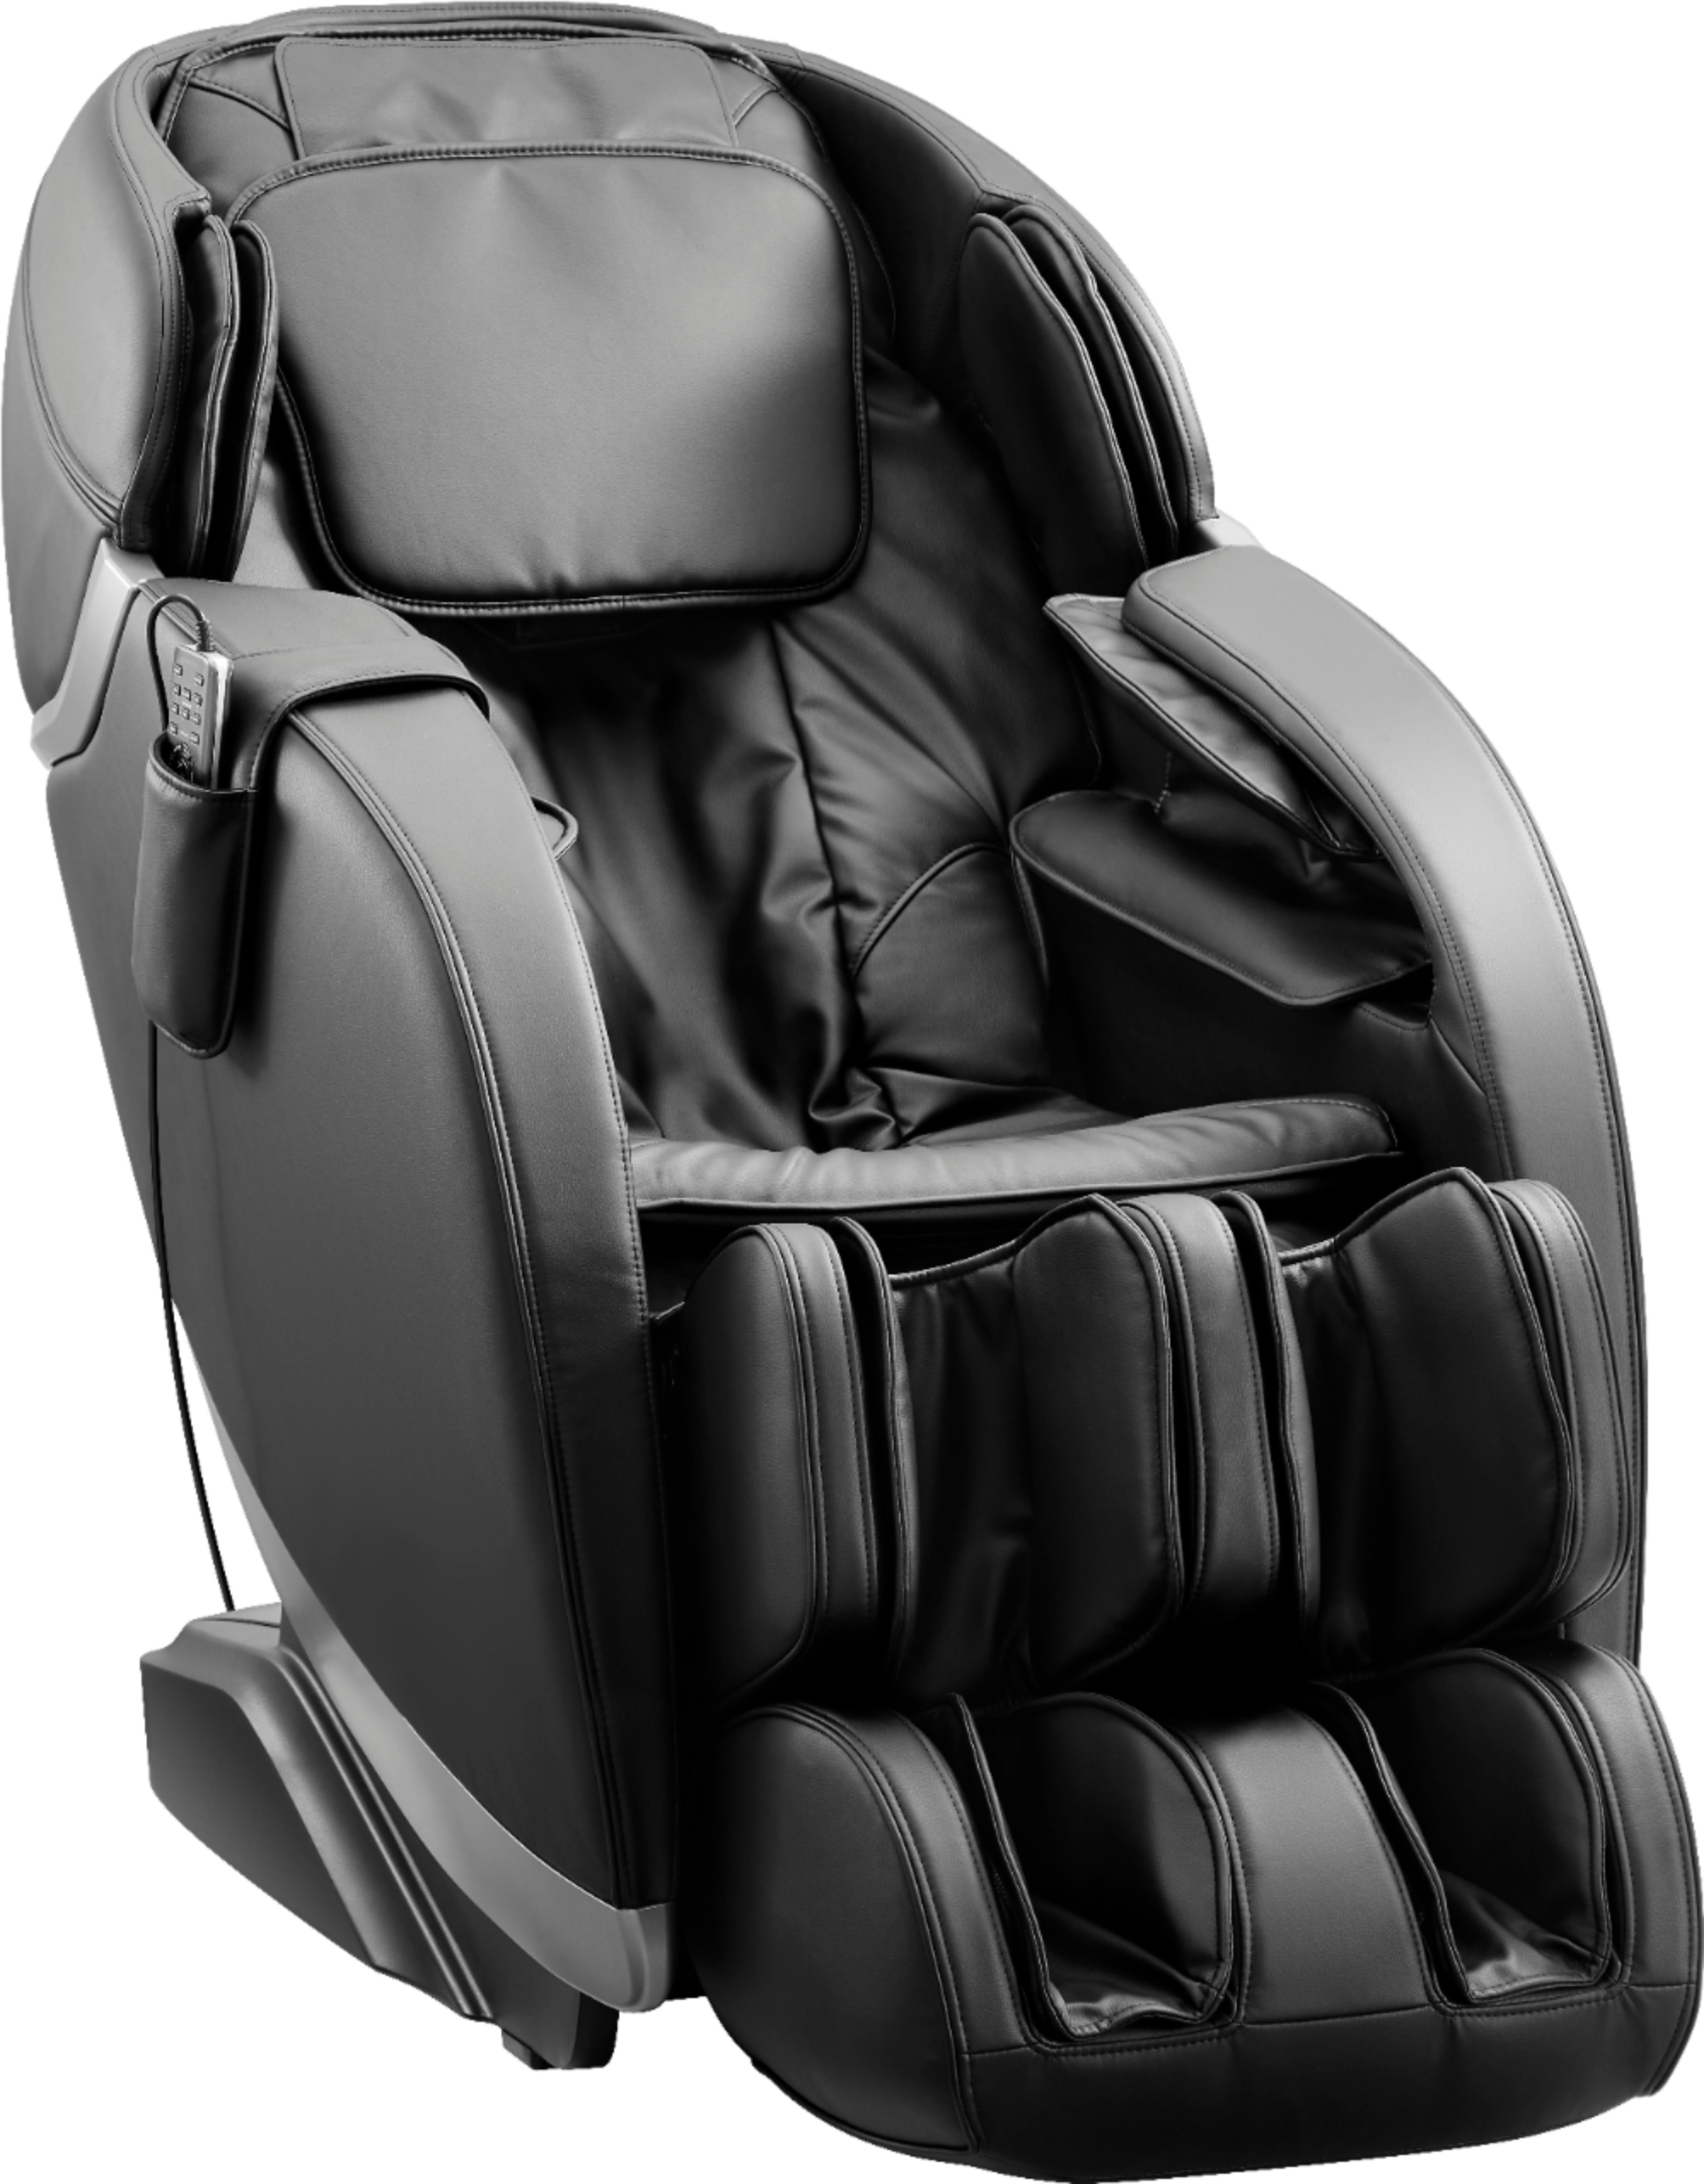 Insignia™ 2D Zero Gravity Full Body Massage Chair Black with silver trim NS-MGC300BK1 - Best Bu... | Best Buy U.S.